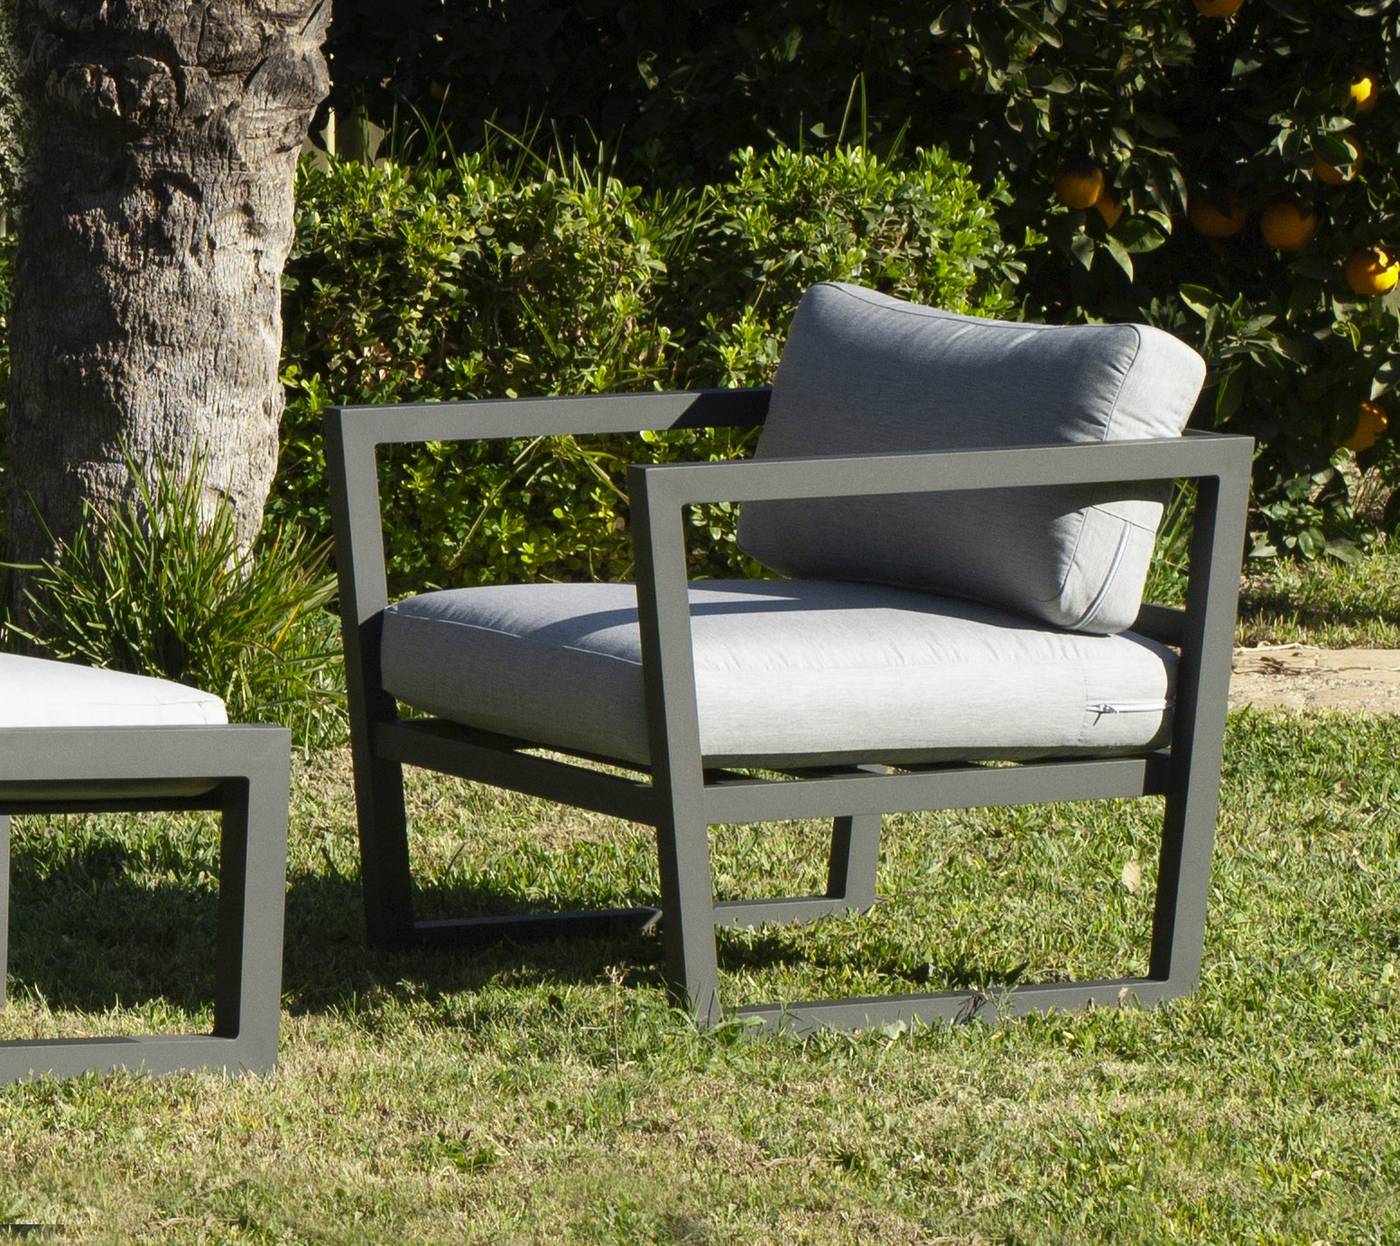 Set Aluminio Luxe Montana-10 - Conjunto aluminio: 1 sofá 3 plazas + 2 sillones + 1 mesa de centro + 2 reposapiés + cojines. Disponible en color blanco o antracita.